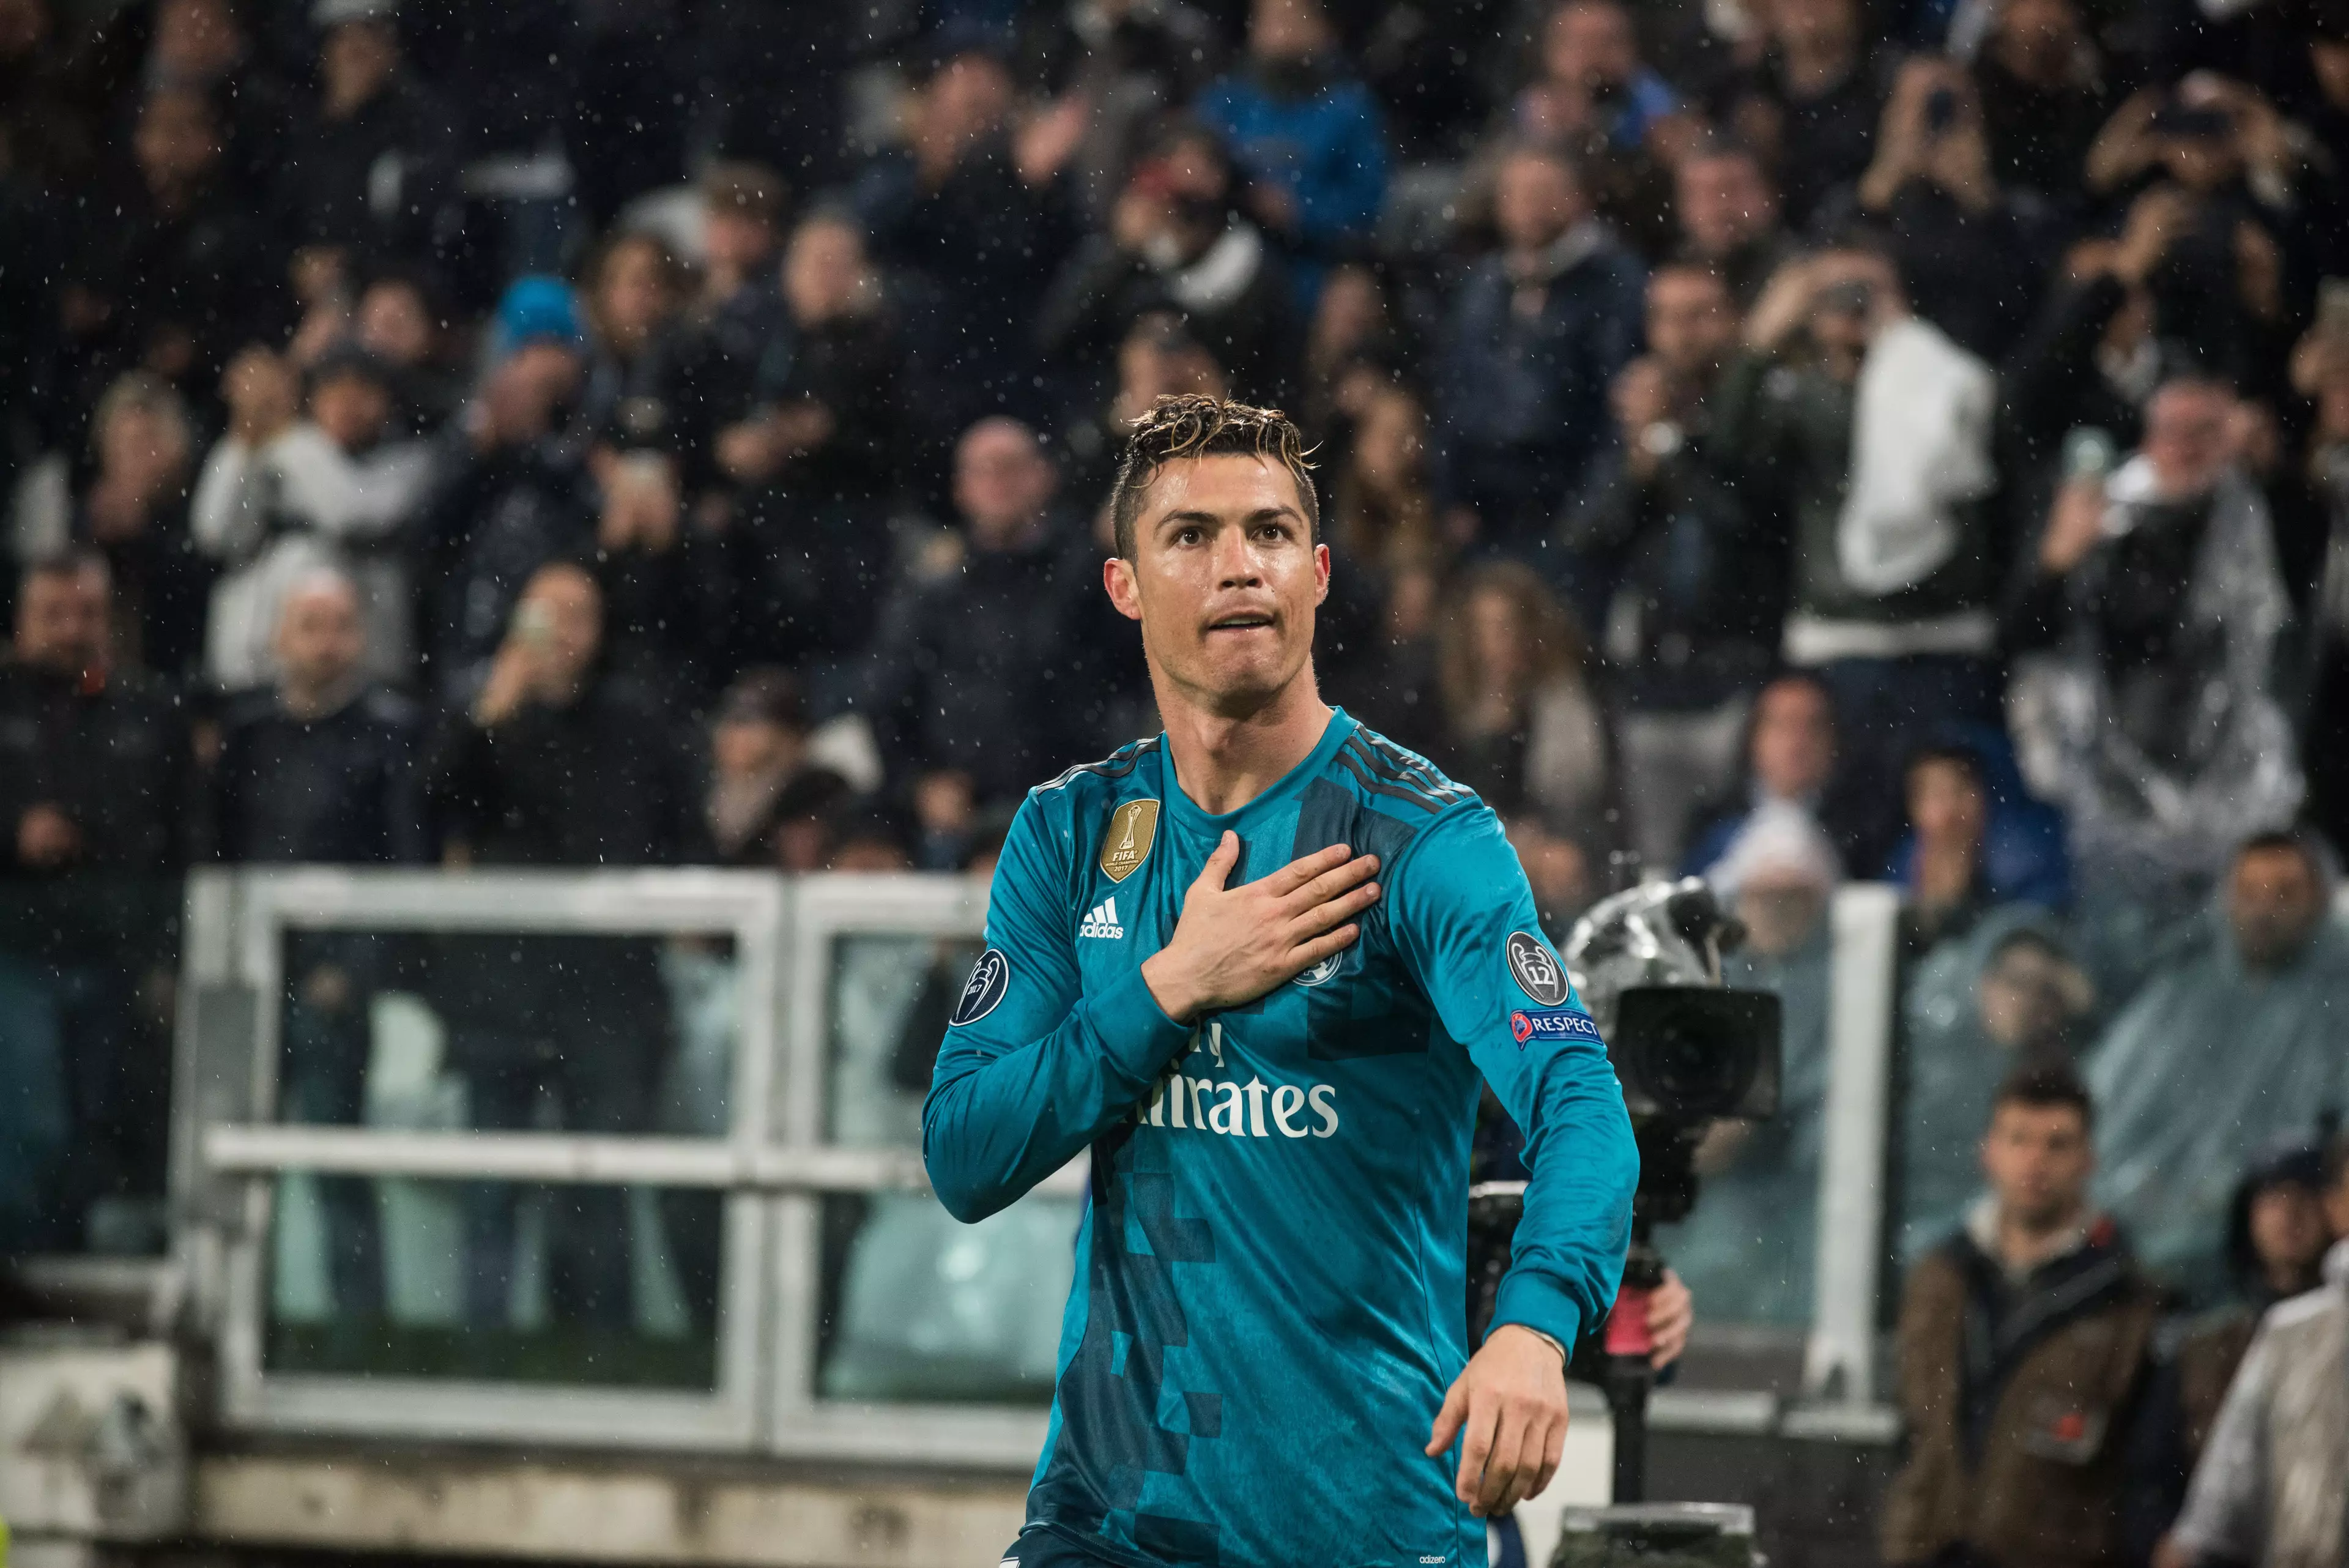 Ronaldo gestures to the Juventus fans. Image: PA